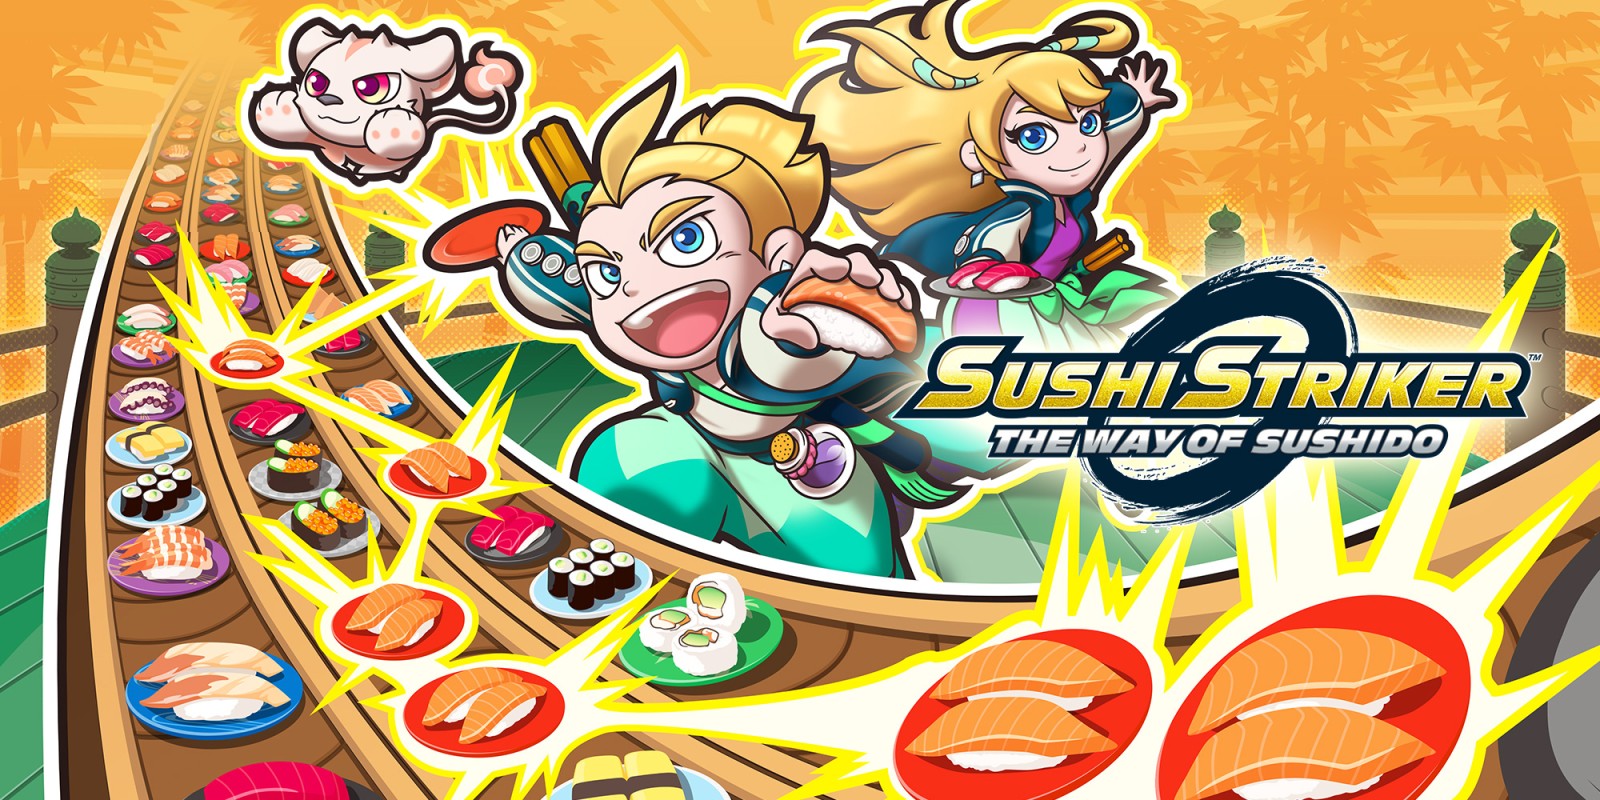 New footage Sushi Striker